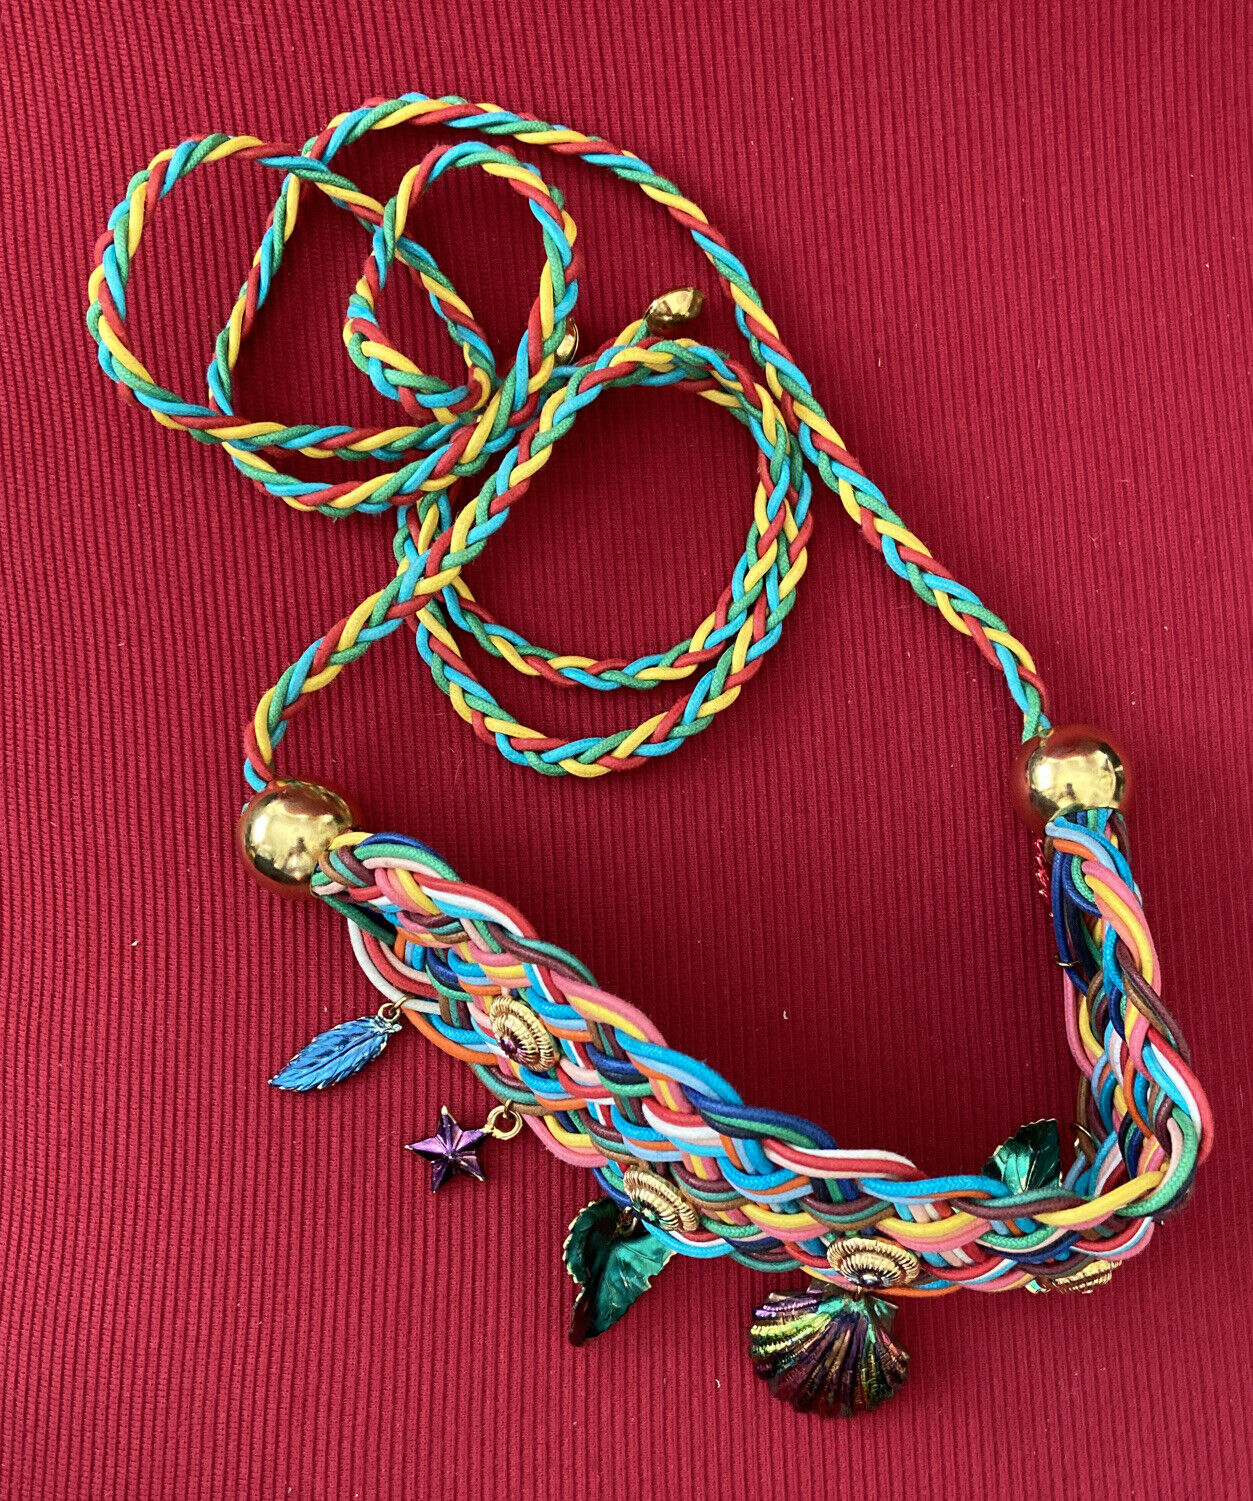 Beautiful multicolored belt with pendants